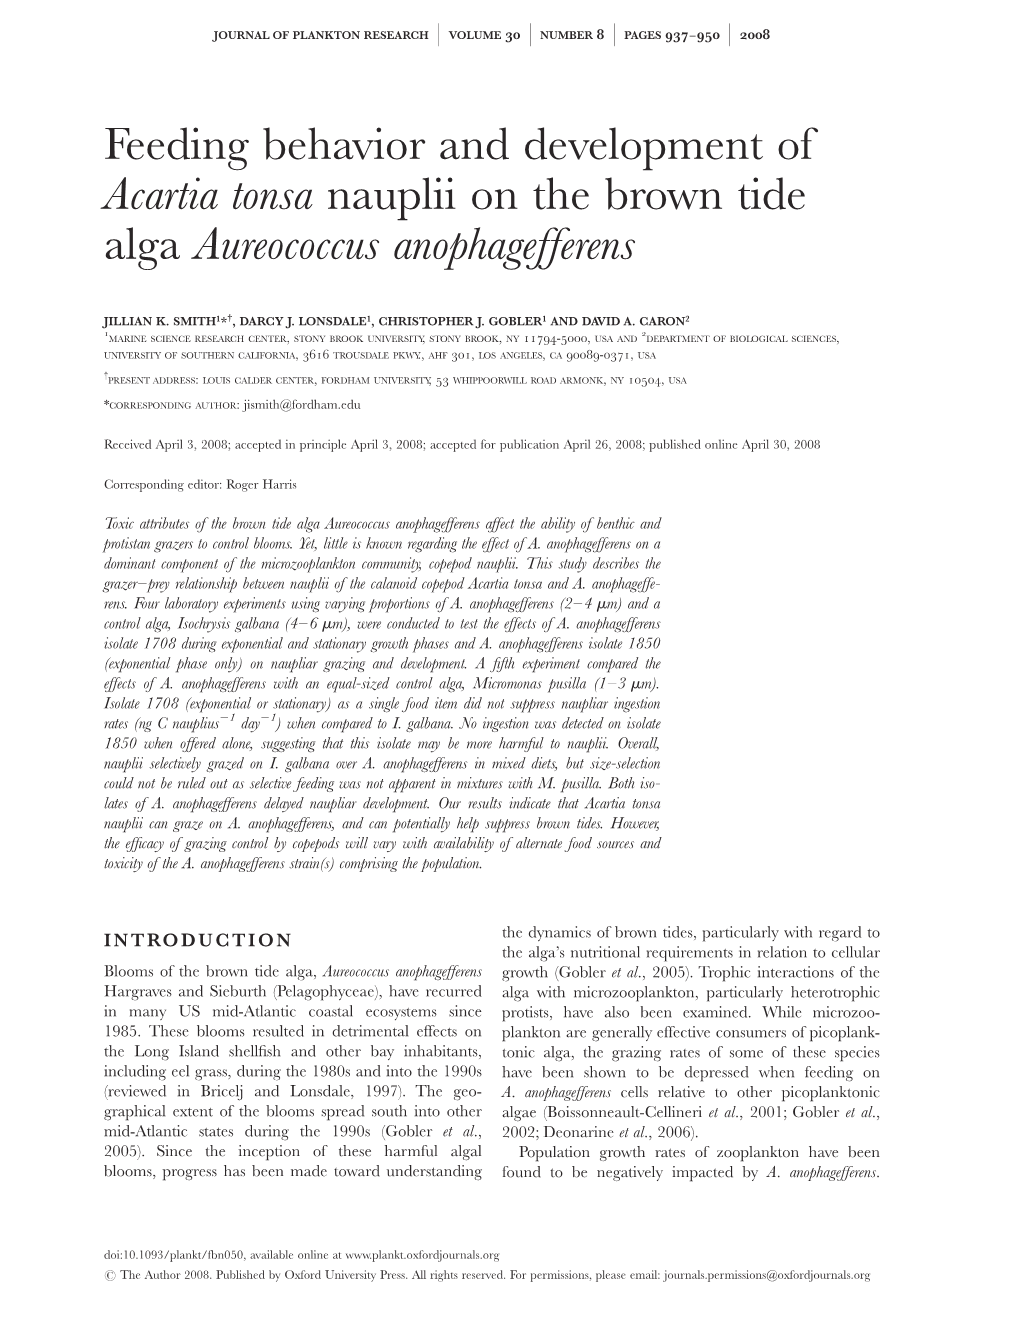 Feeding Behavior and Development of Acartia Tonsa Nauplii on the Brown Tide Alga Aureococcus Anophagefferens